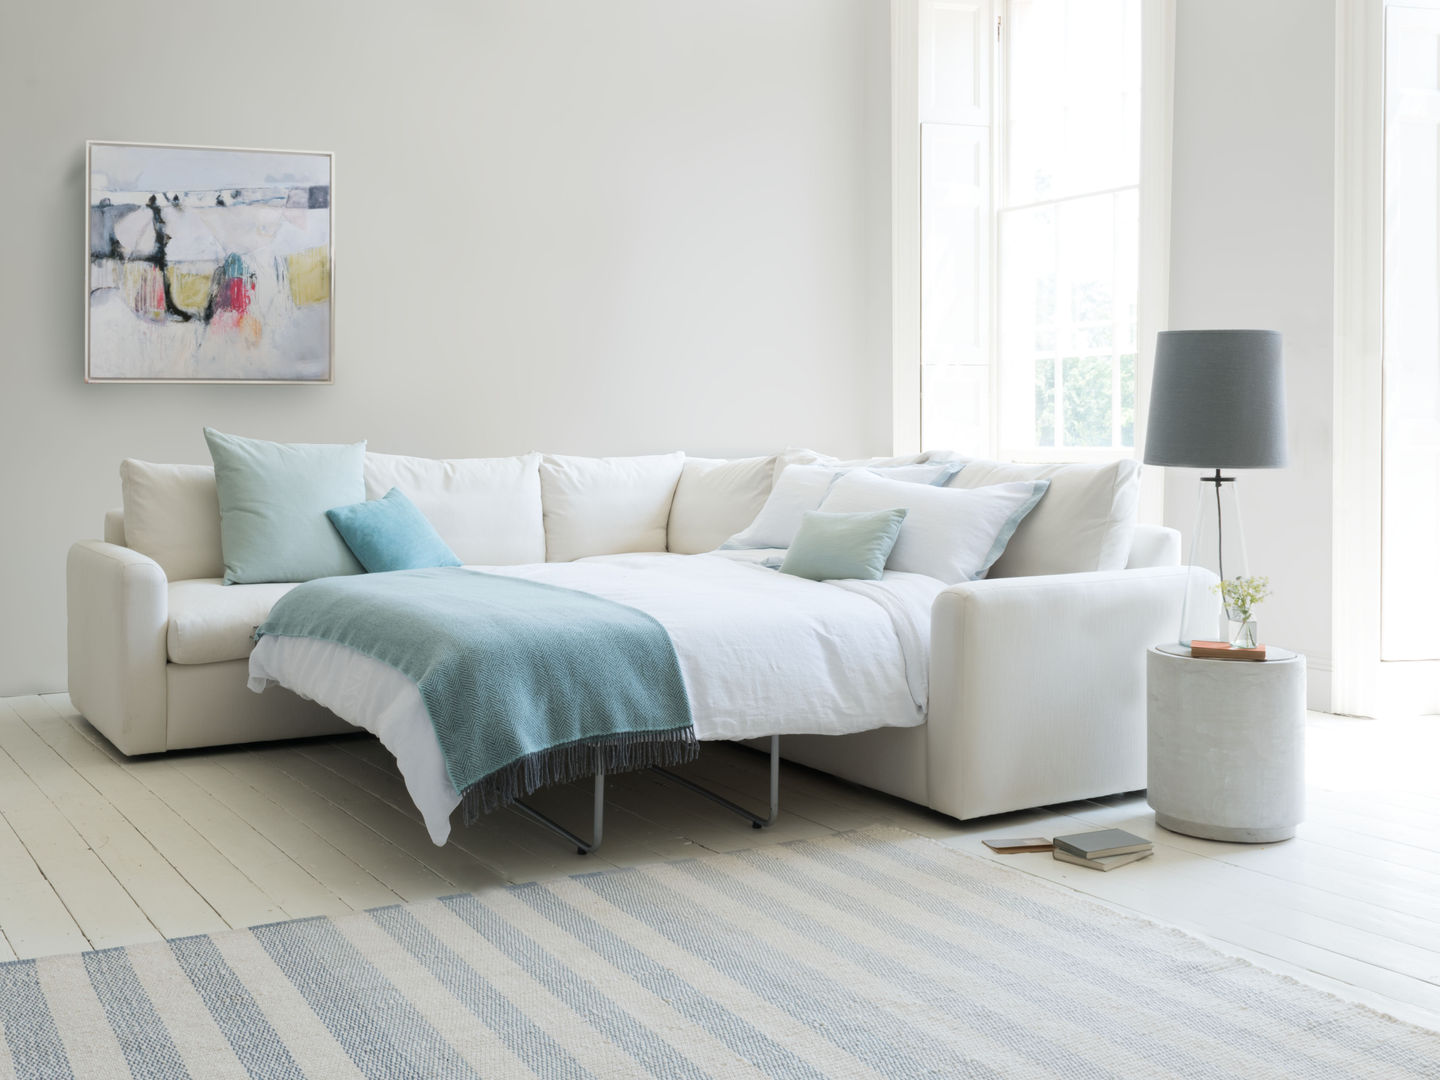 Chatnap with sofa bed Loaf غرفة المعيشة sofa,living room,home,modular sofa,sofa bed,linen,white,space